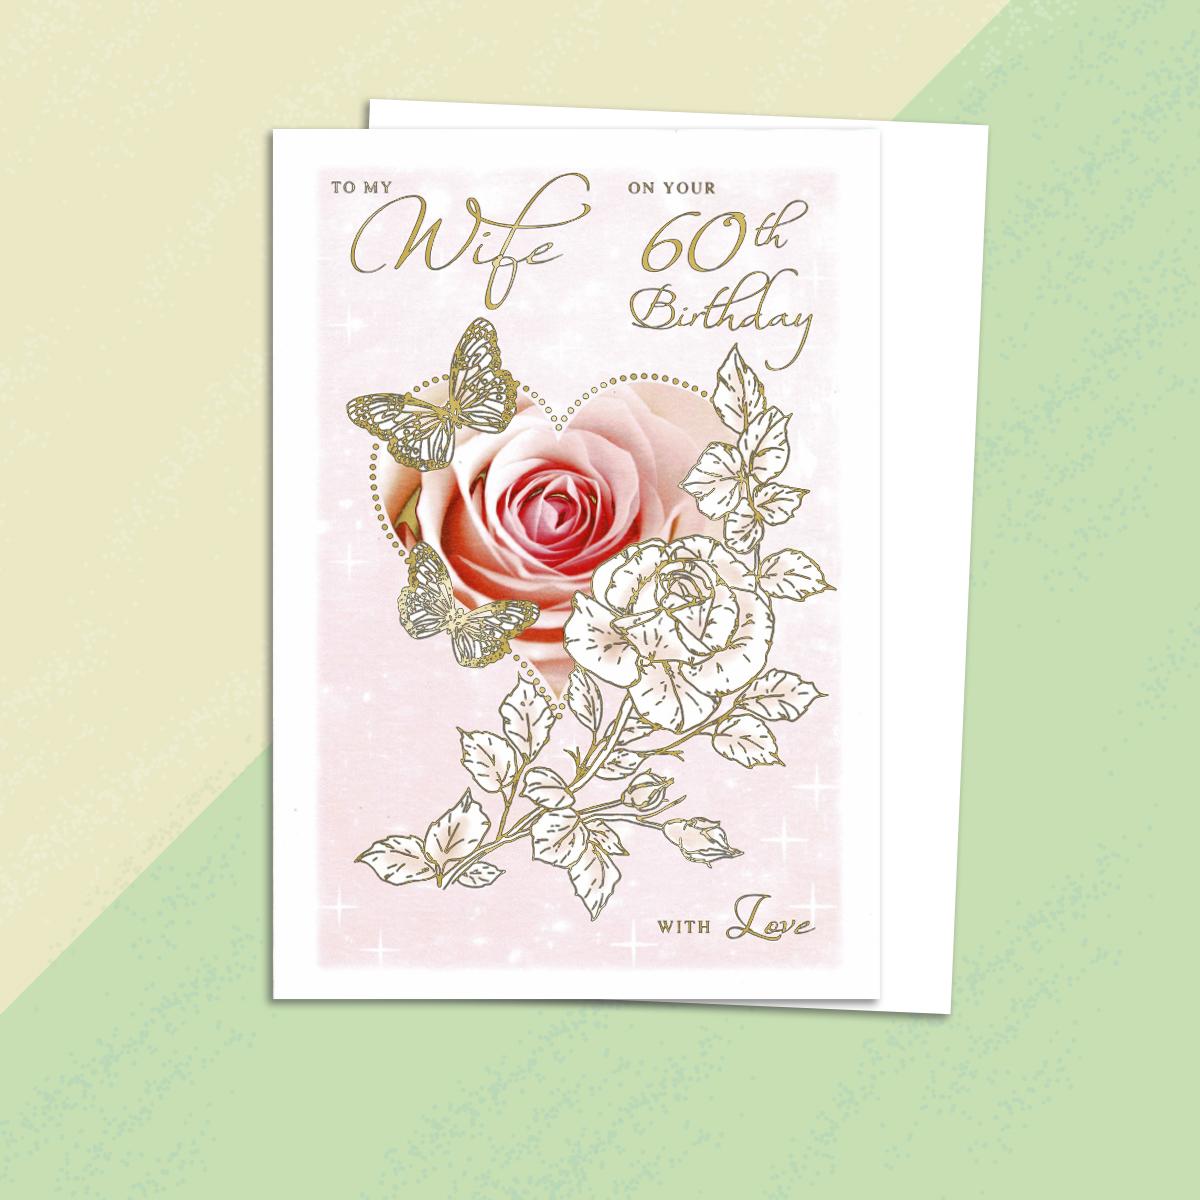 Wife Age 60 Birthday Card Alongside Its White Envelope